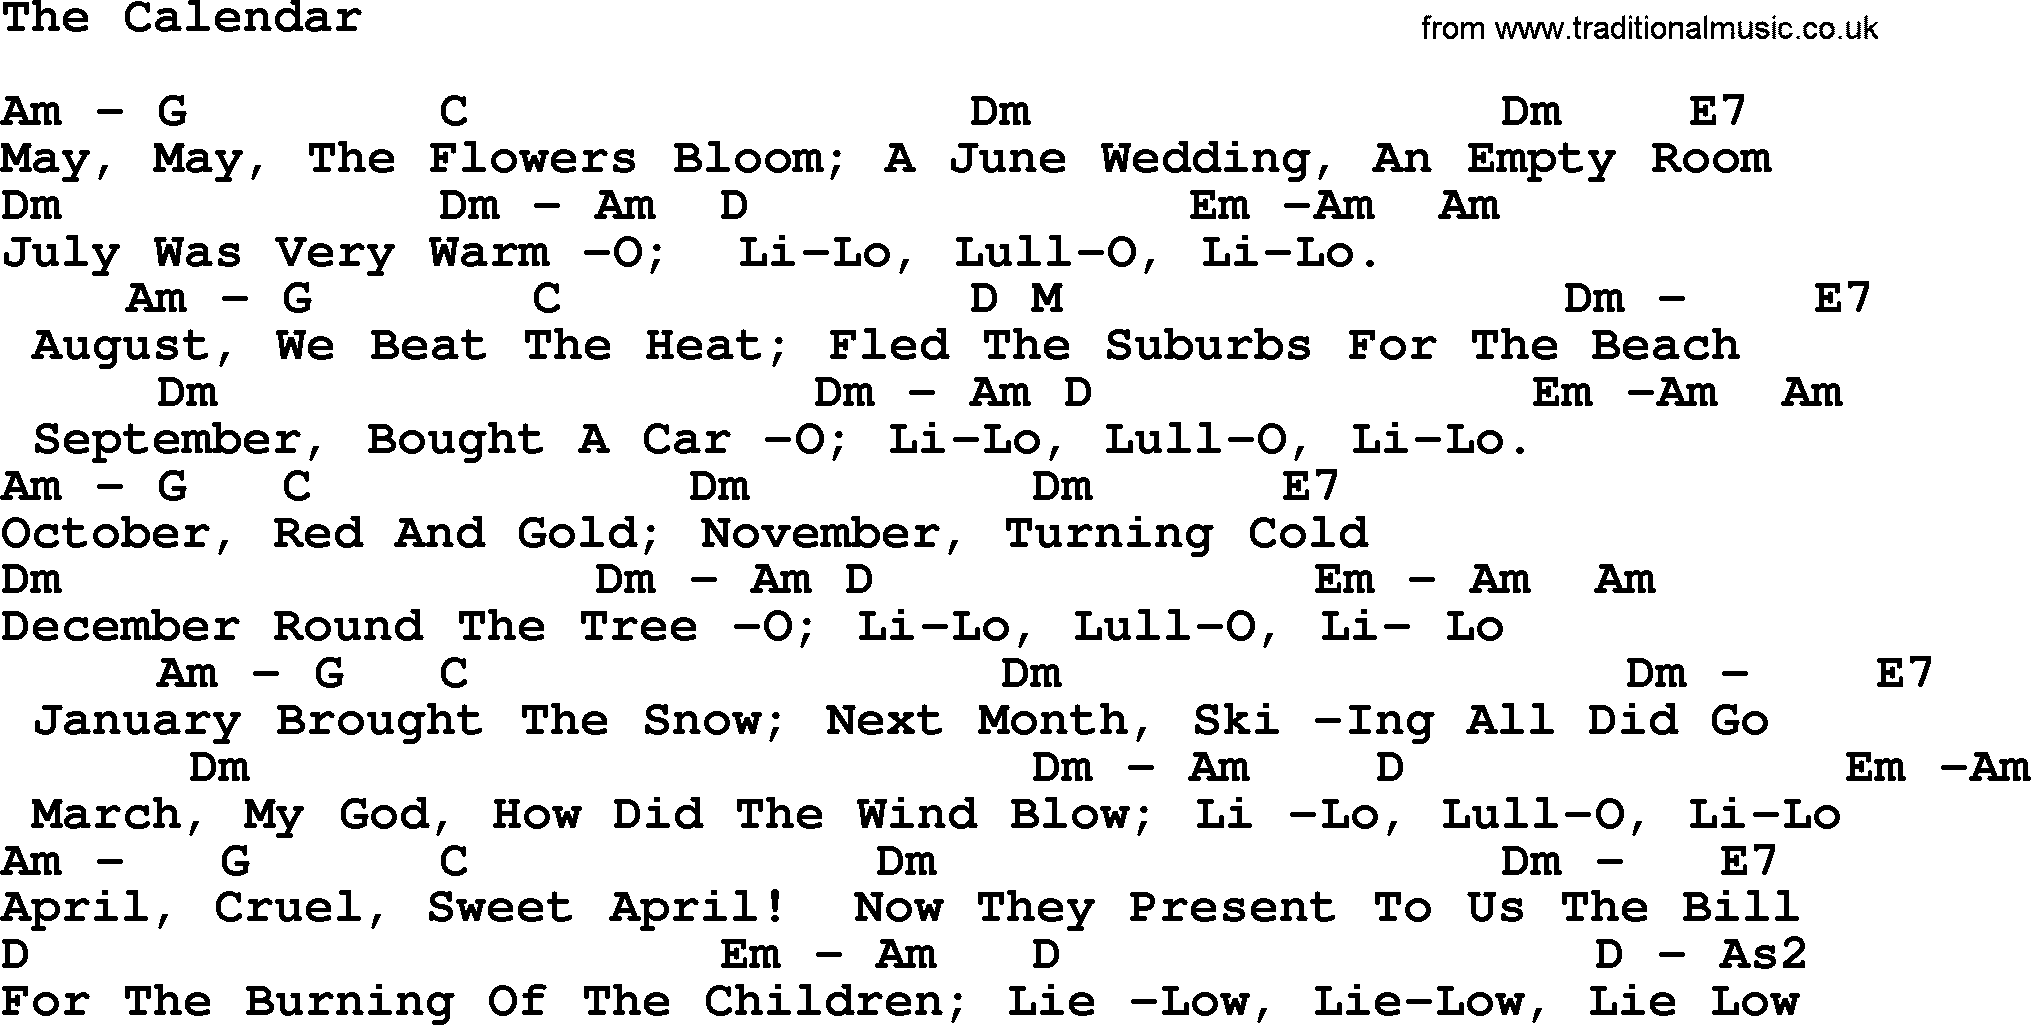 Pete Seeger song The Calendar, lyrics and chords